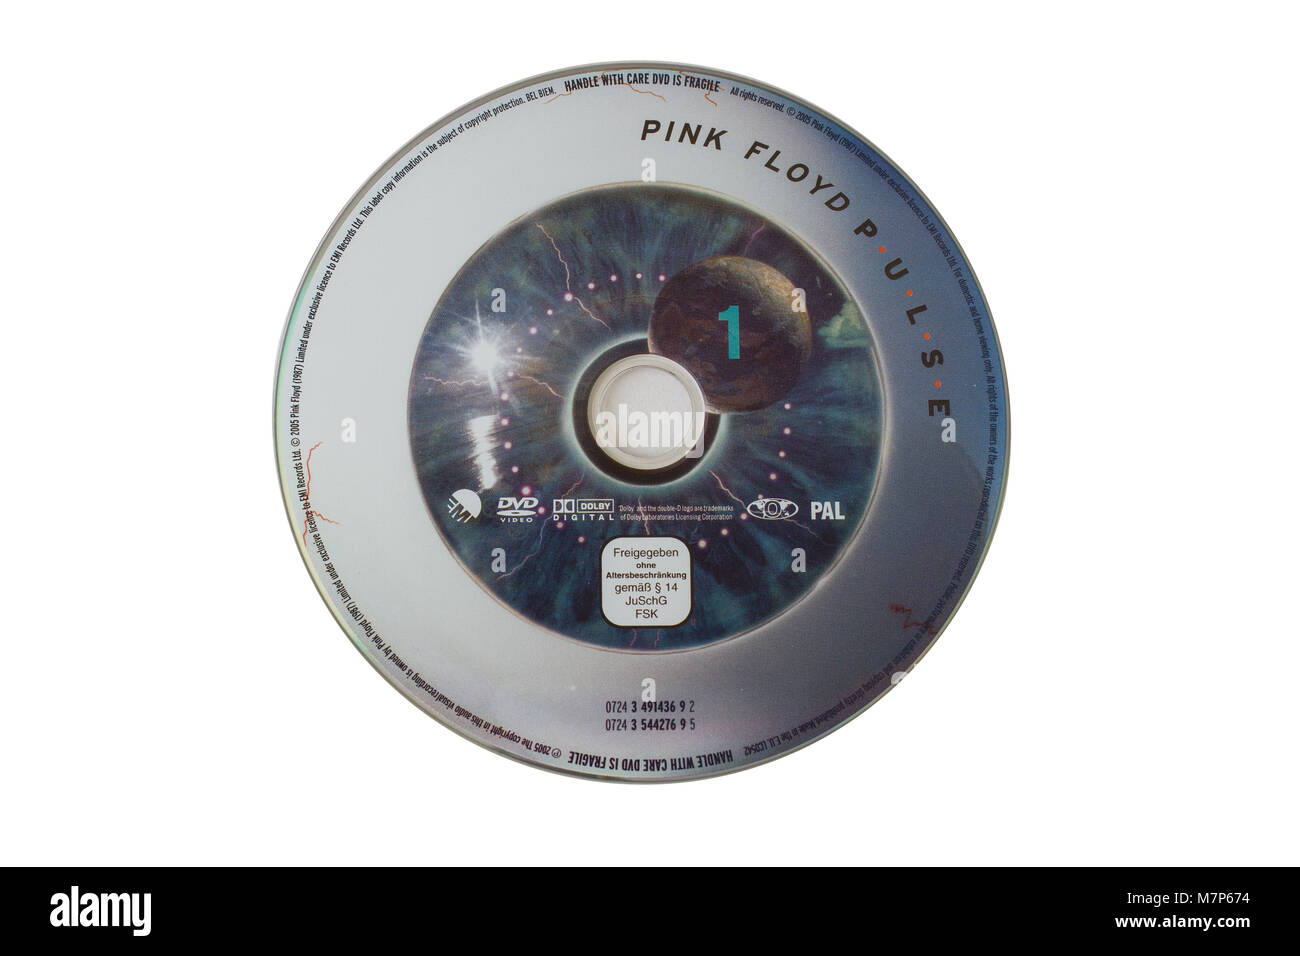 Pink Floyd PULSE original DVD Stock Photo - Alamy